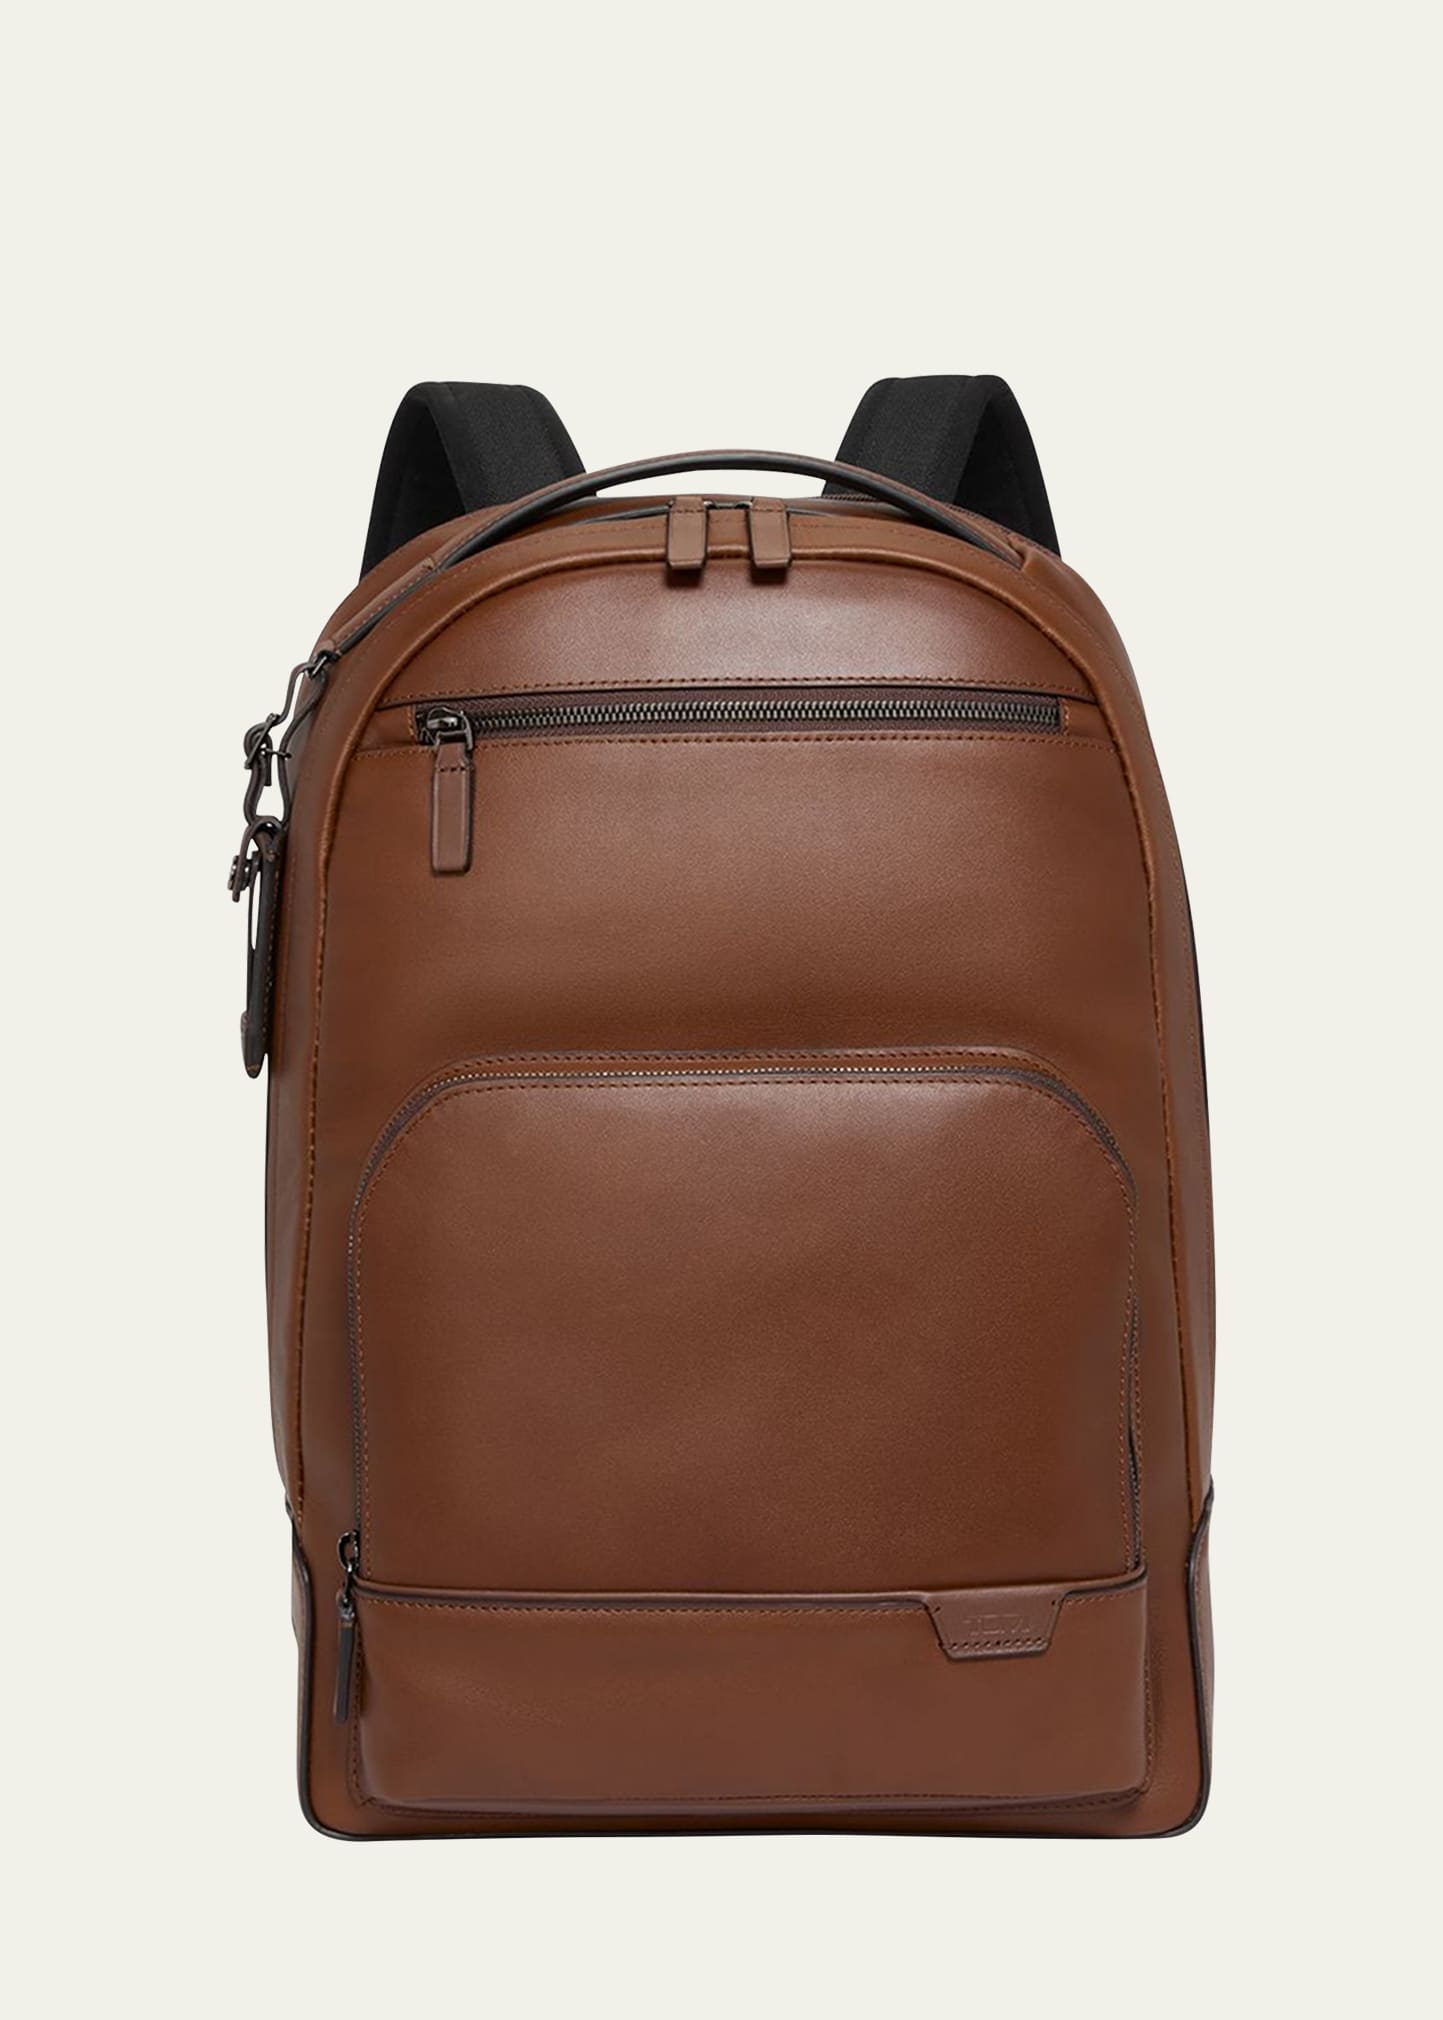 Warren Leather Backpack